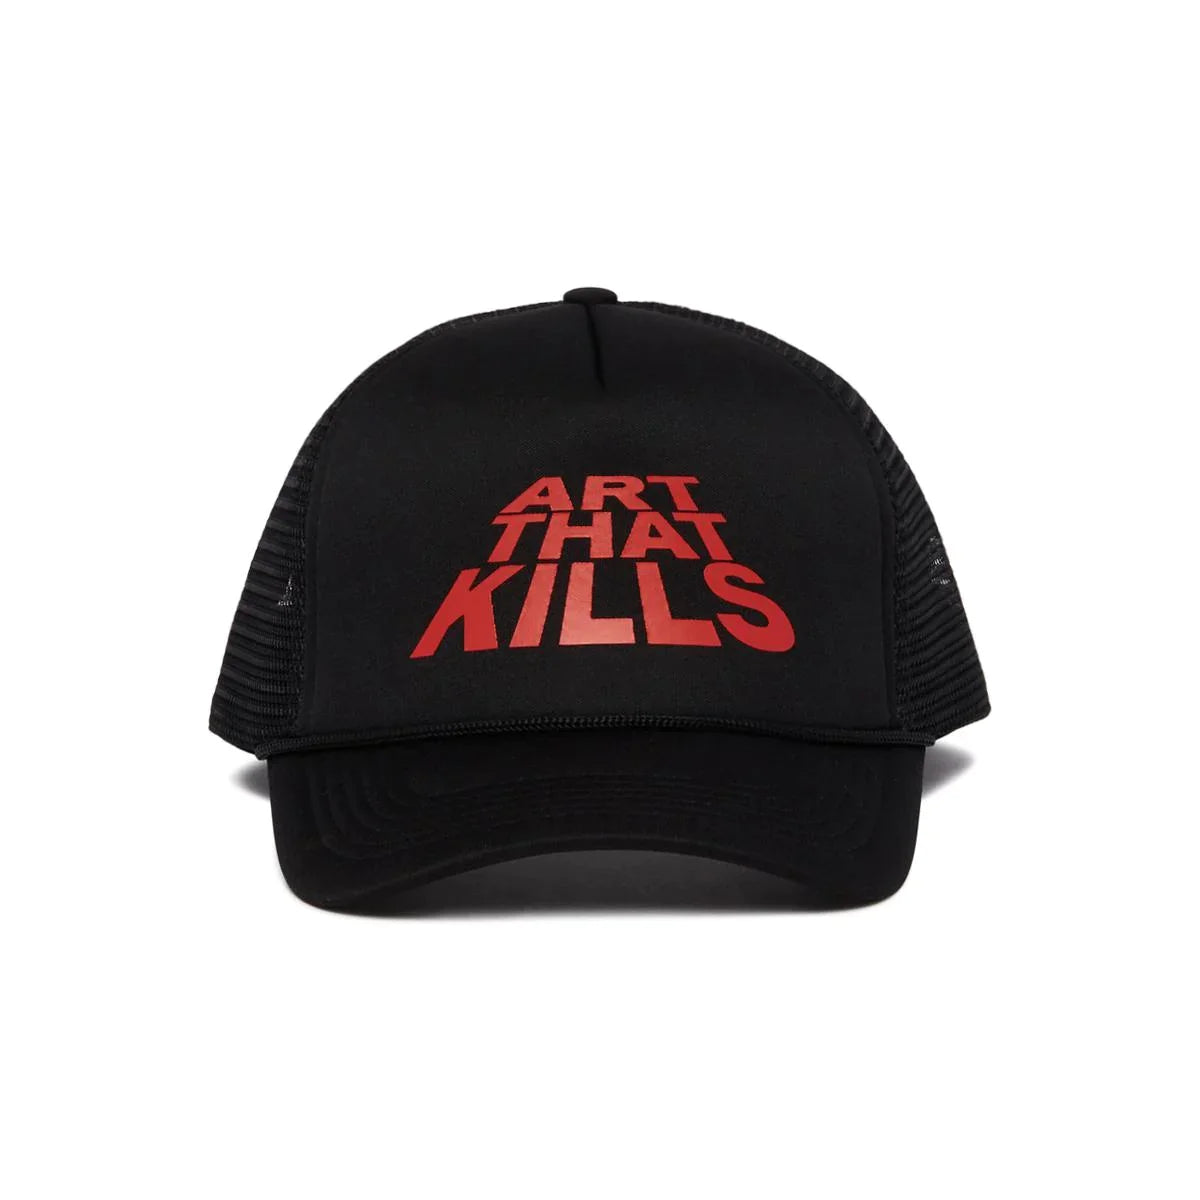 Gallery Dept. Art That Kills Trucker Hat Black